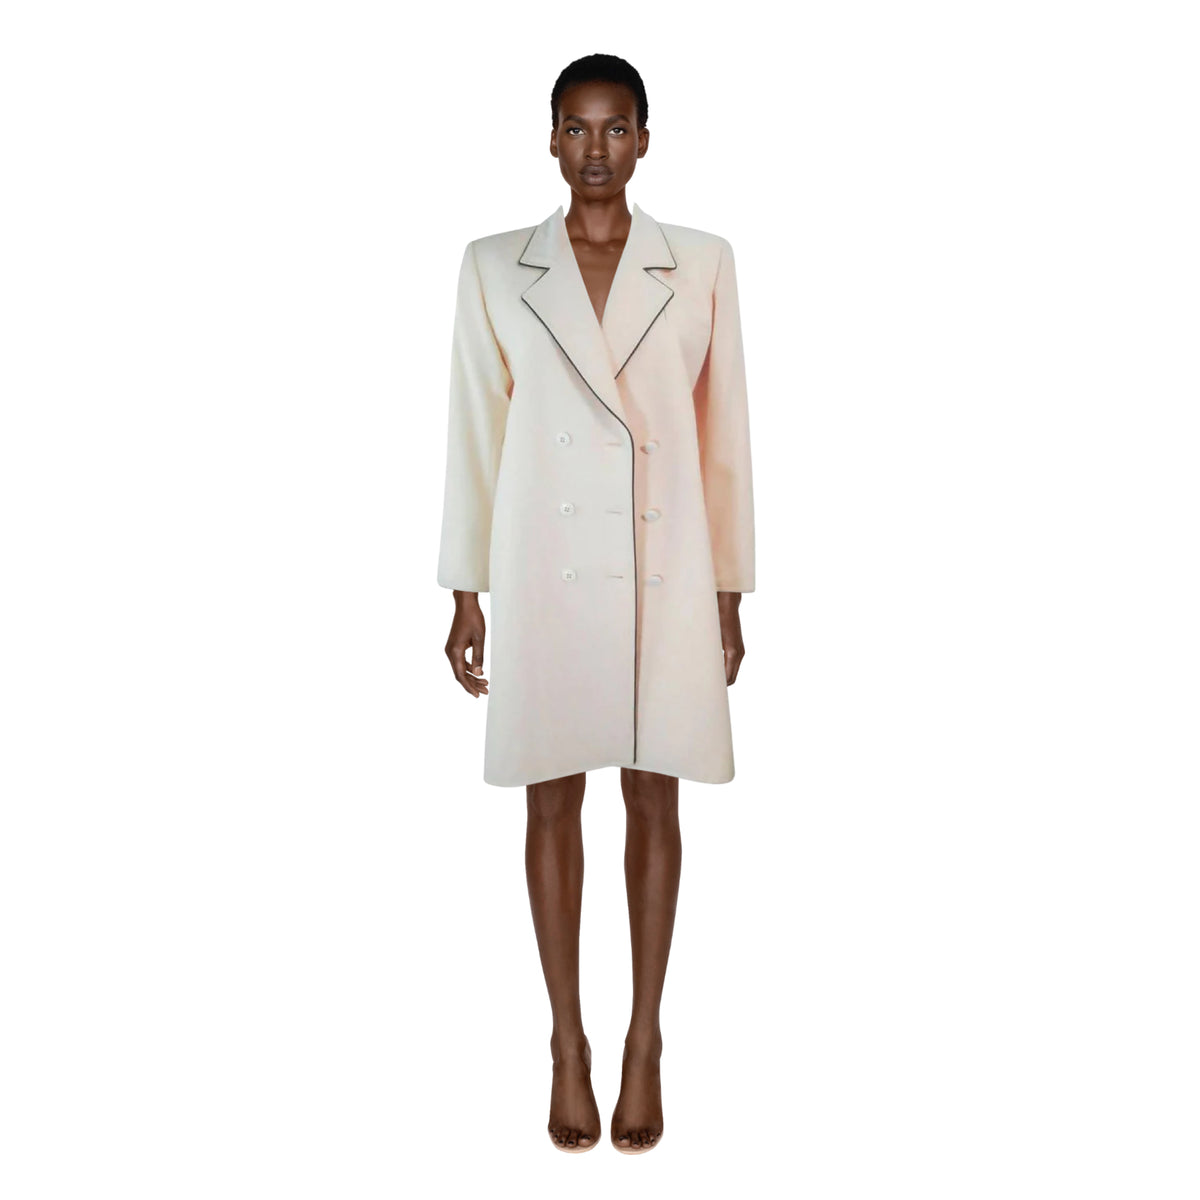 YVES SAINT LAURENT Ivory Wool Tuxedo Dress | Size M/L